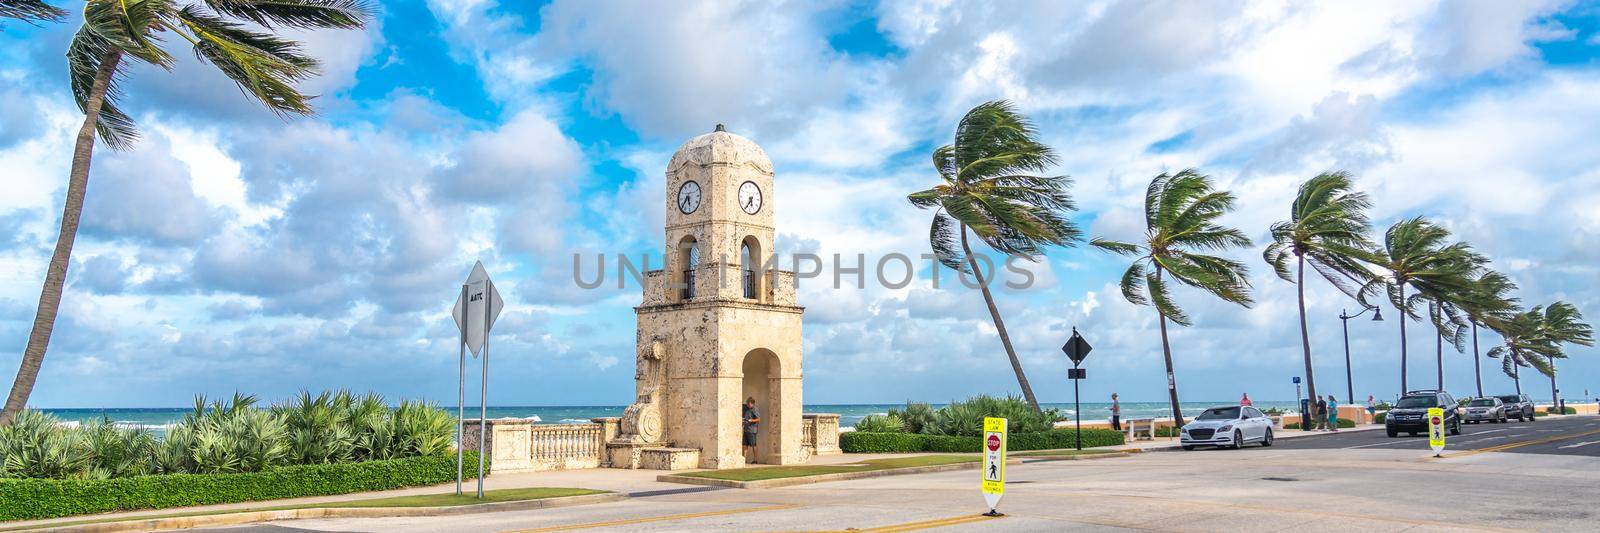 Palm Beach, Florida, USA - September 14, 2019: Worth Avenue clock tower in USA